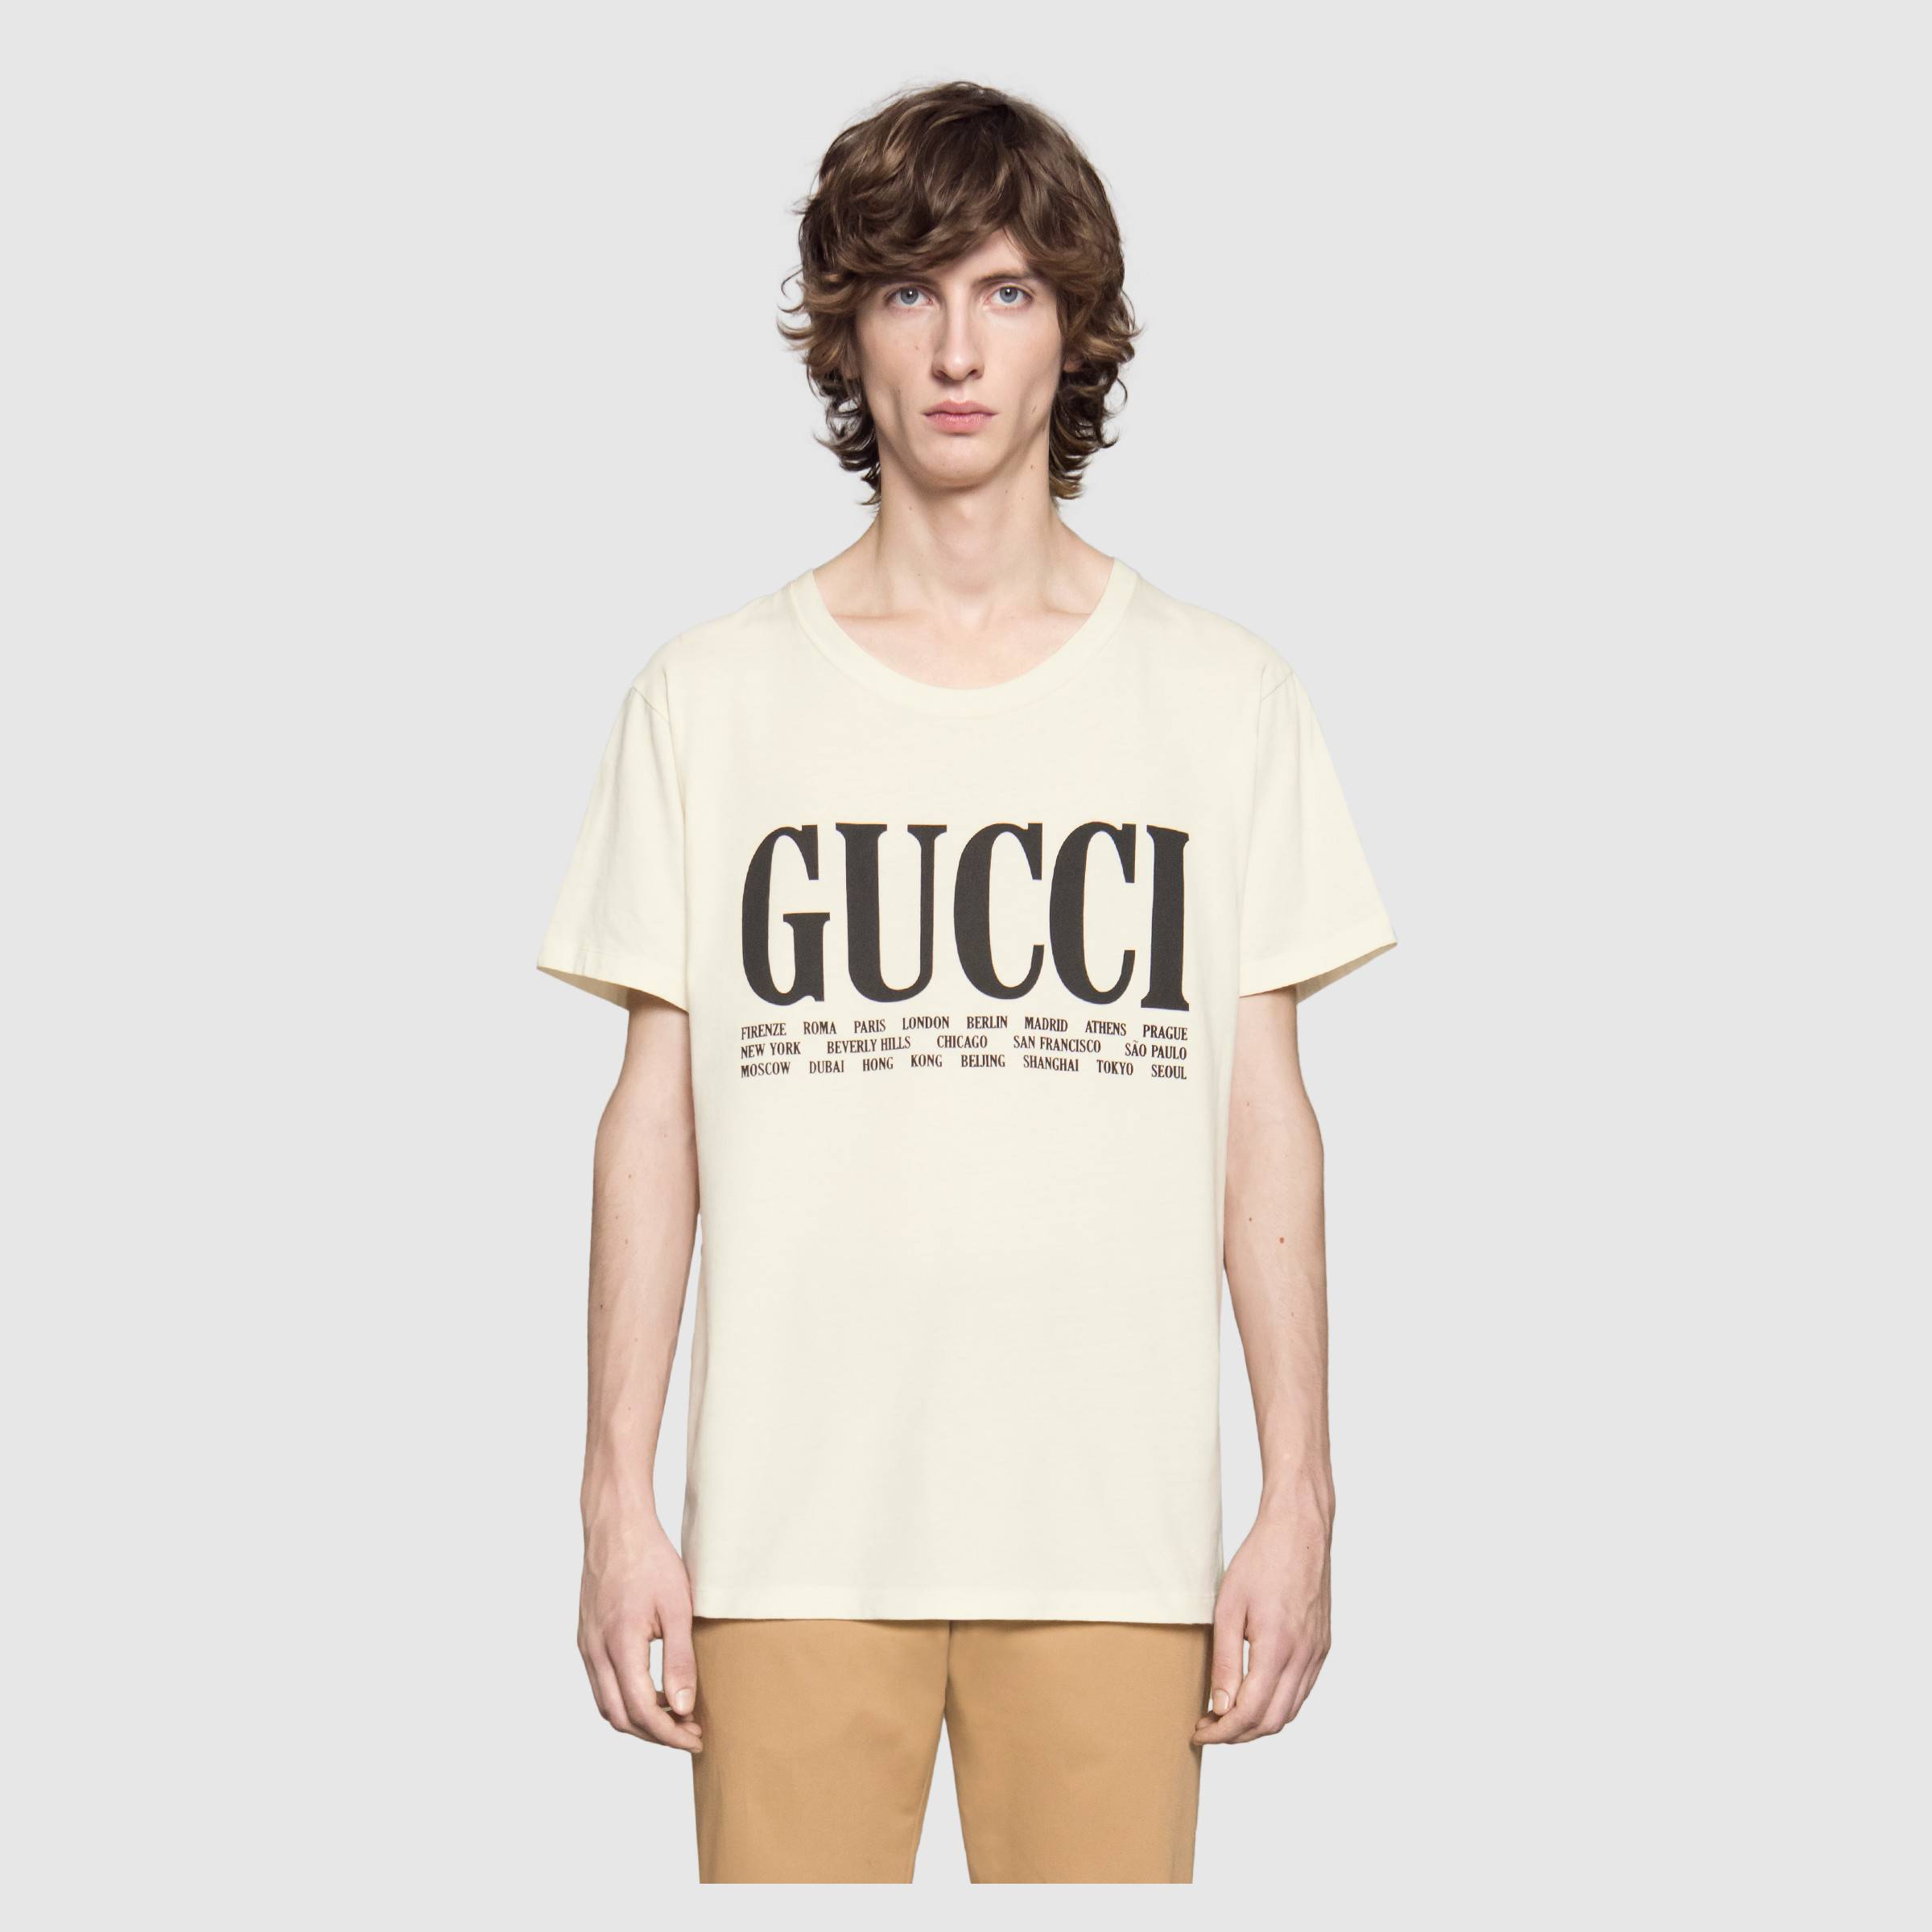 gucci summer shirts